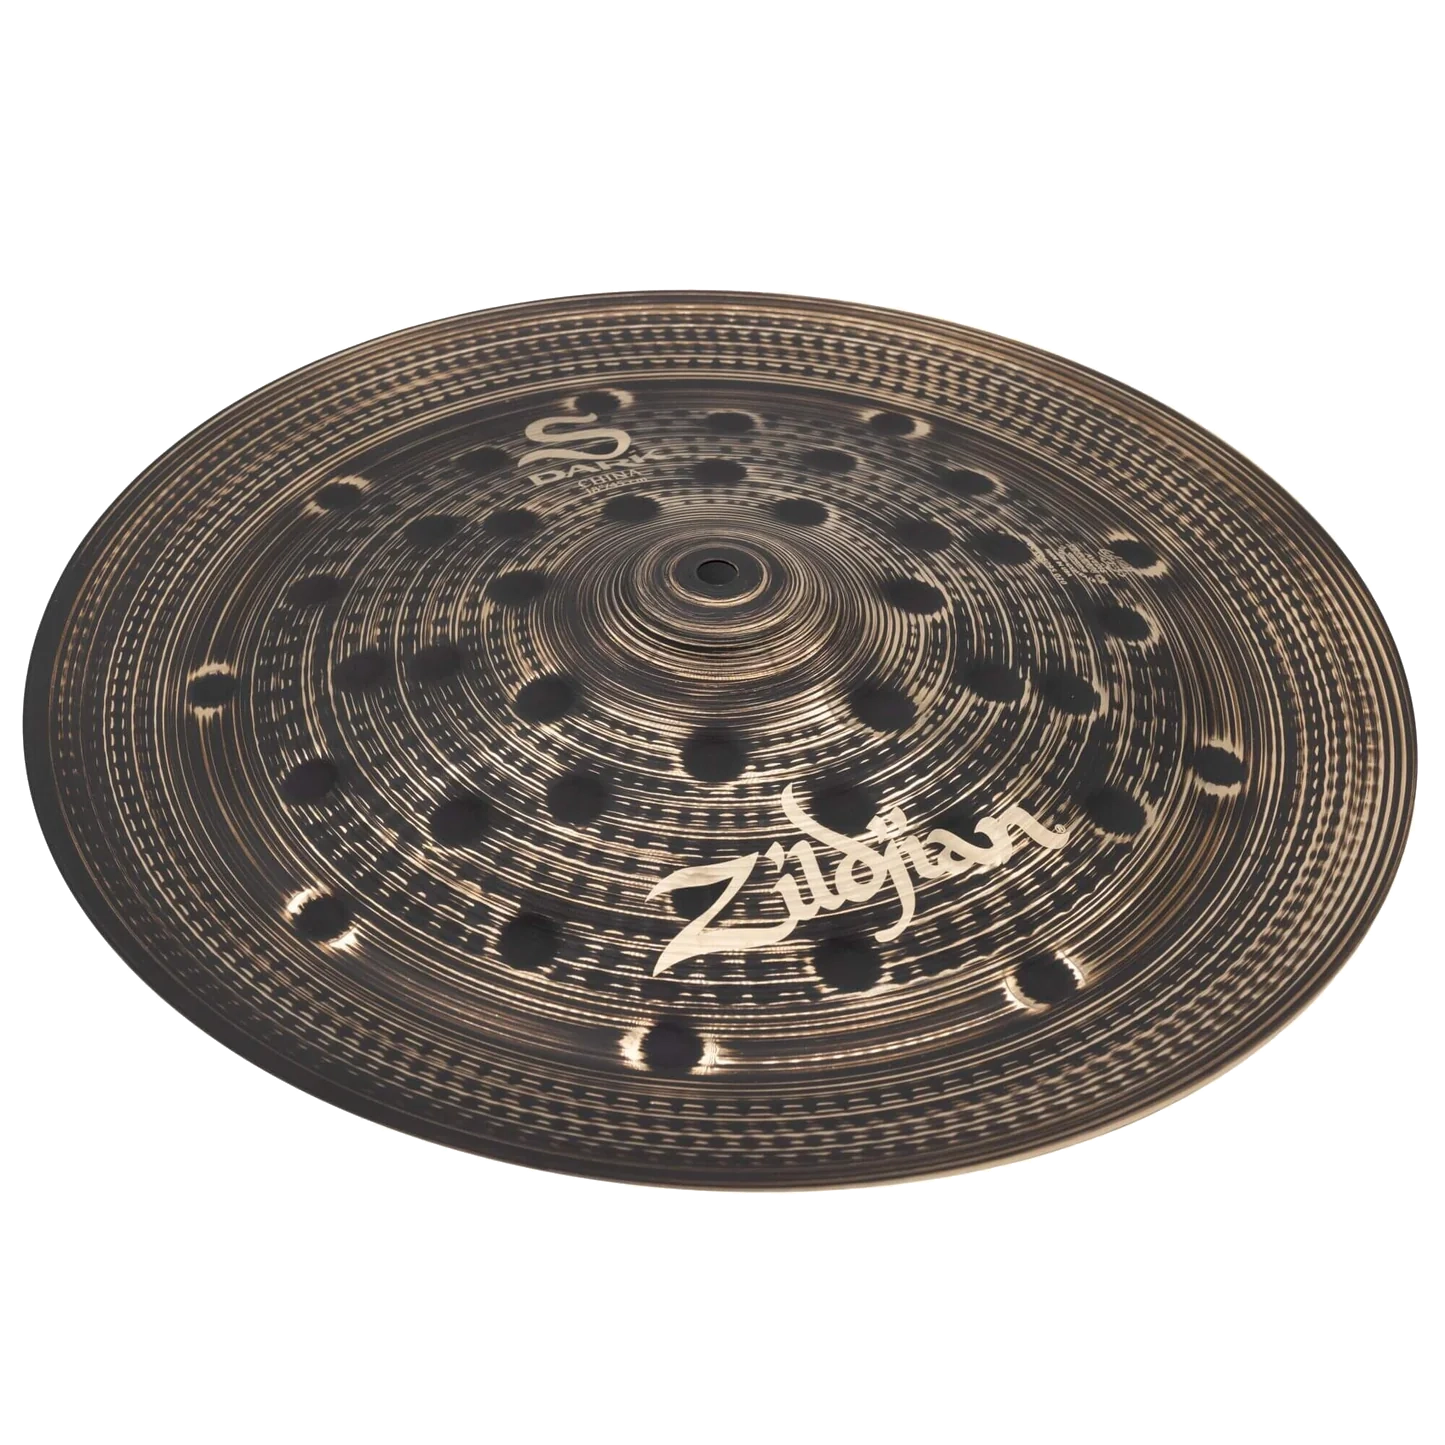 Zildjian Cymbals | 8" S Splash